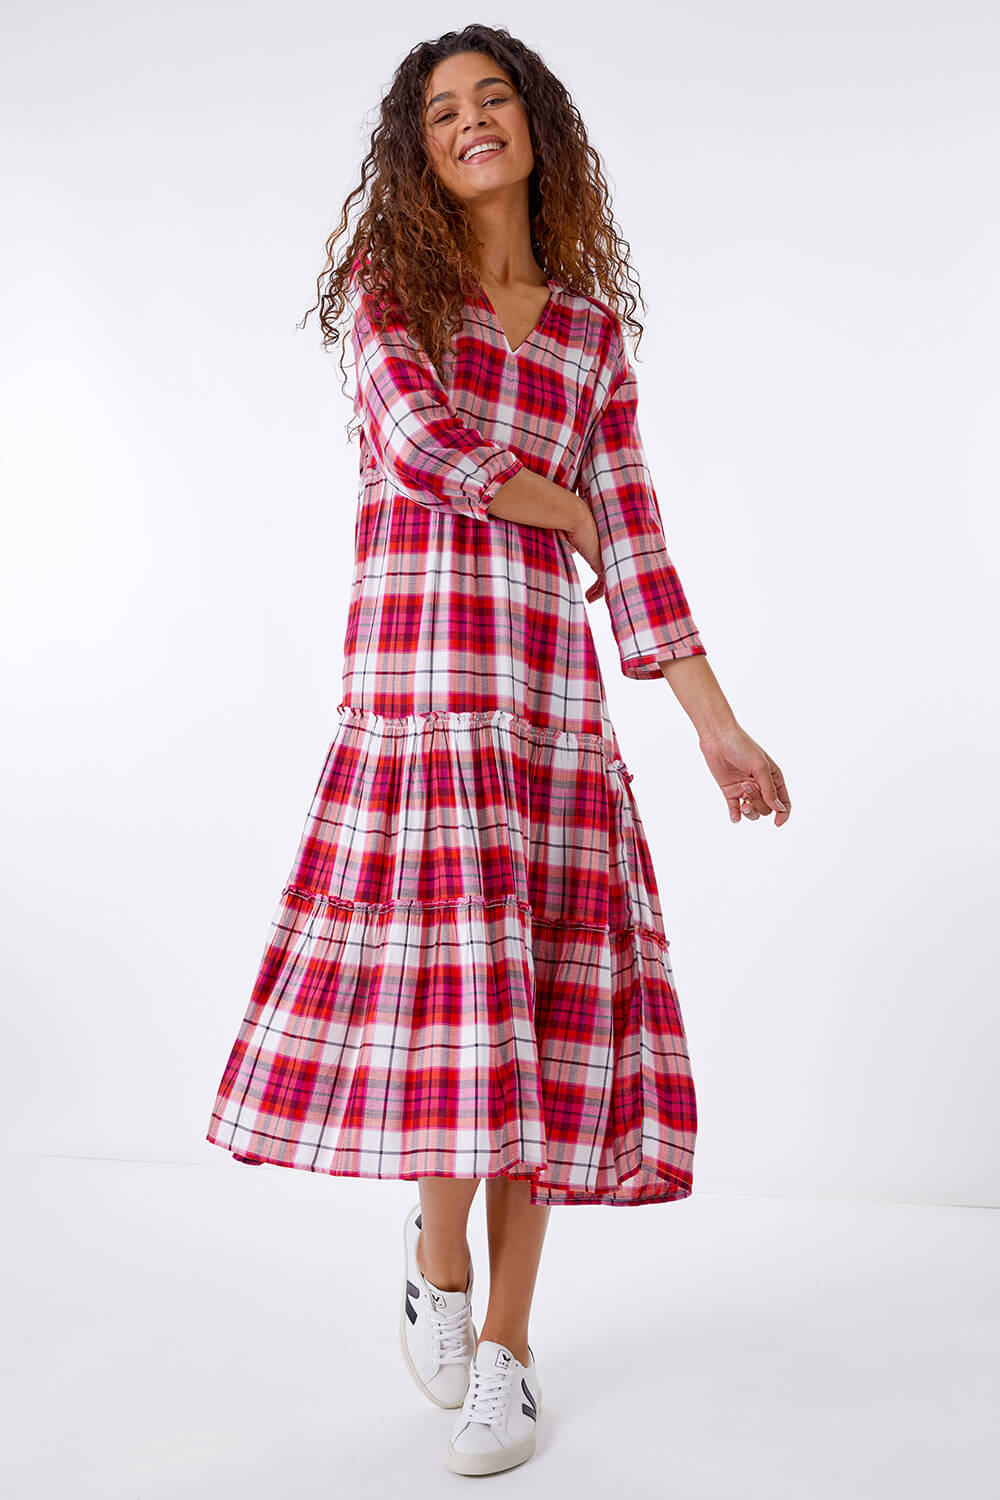 PINK Tiered Check Print Midi Dress, Image 4 of 5